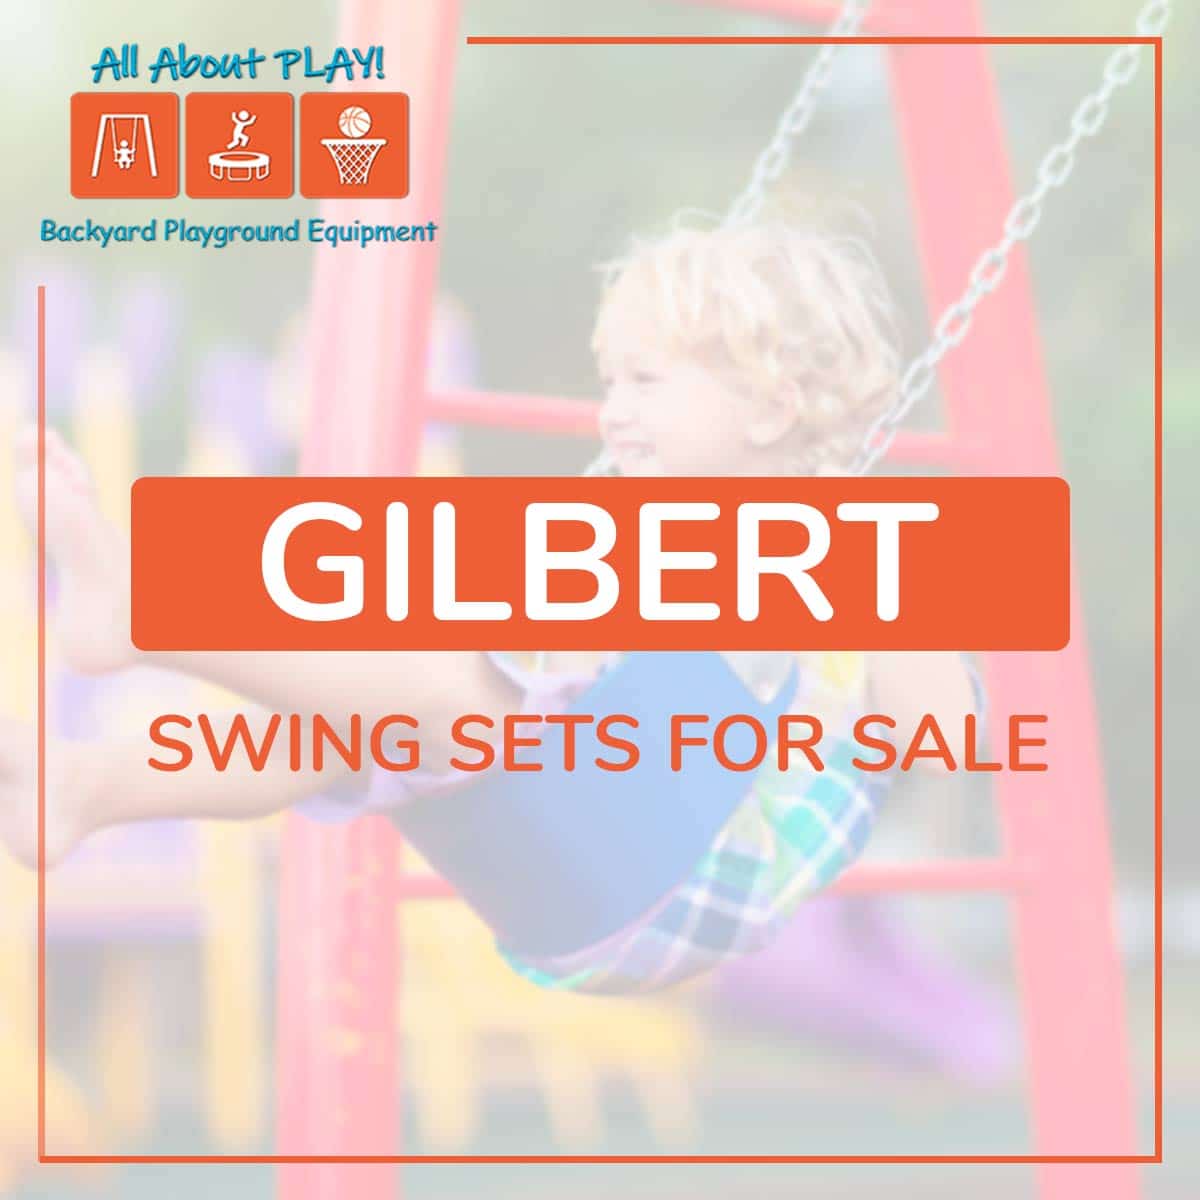 Used Swing Sets For Sale Wooden Swing Sets Under Metal Swing Sets For Adults Wooden Swing Sets Clearance Swing Sets Swing Sets Sales Black Friday  weekleaks.me